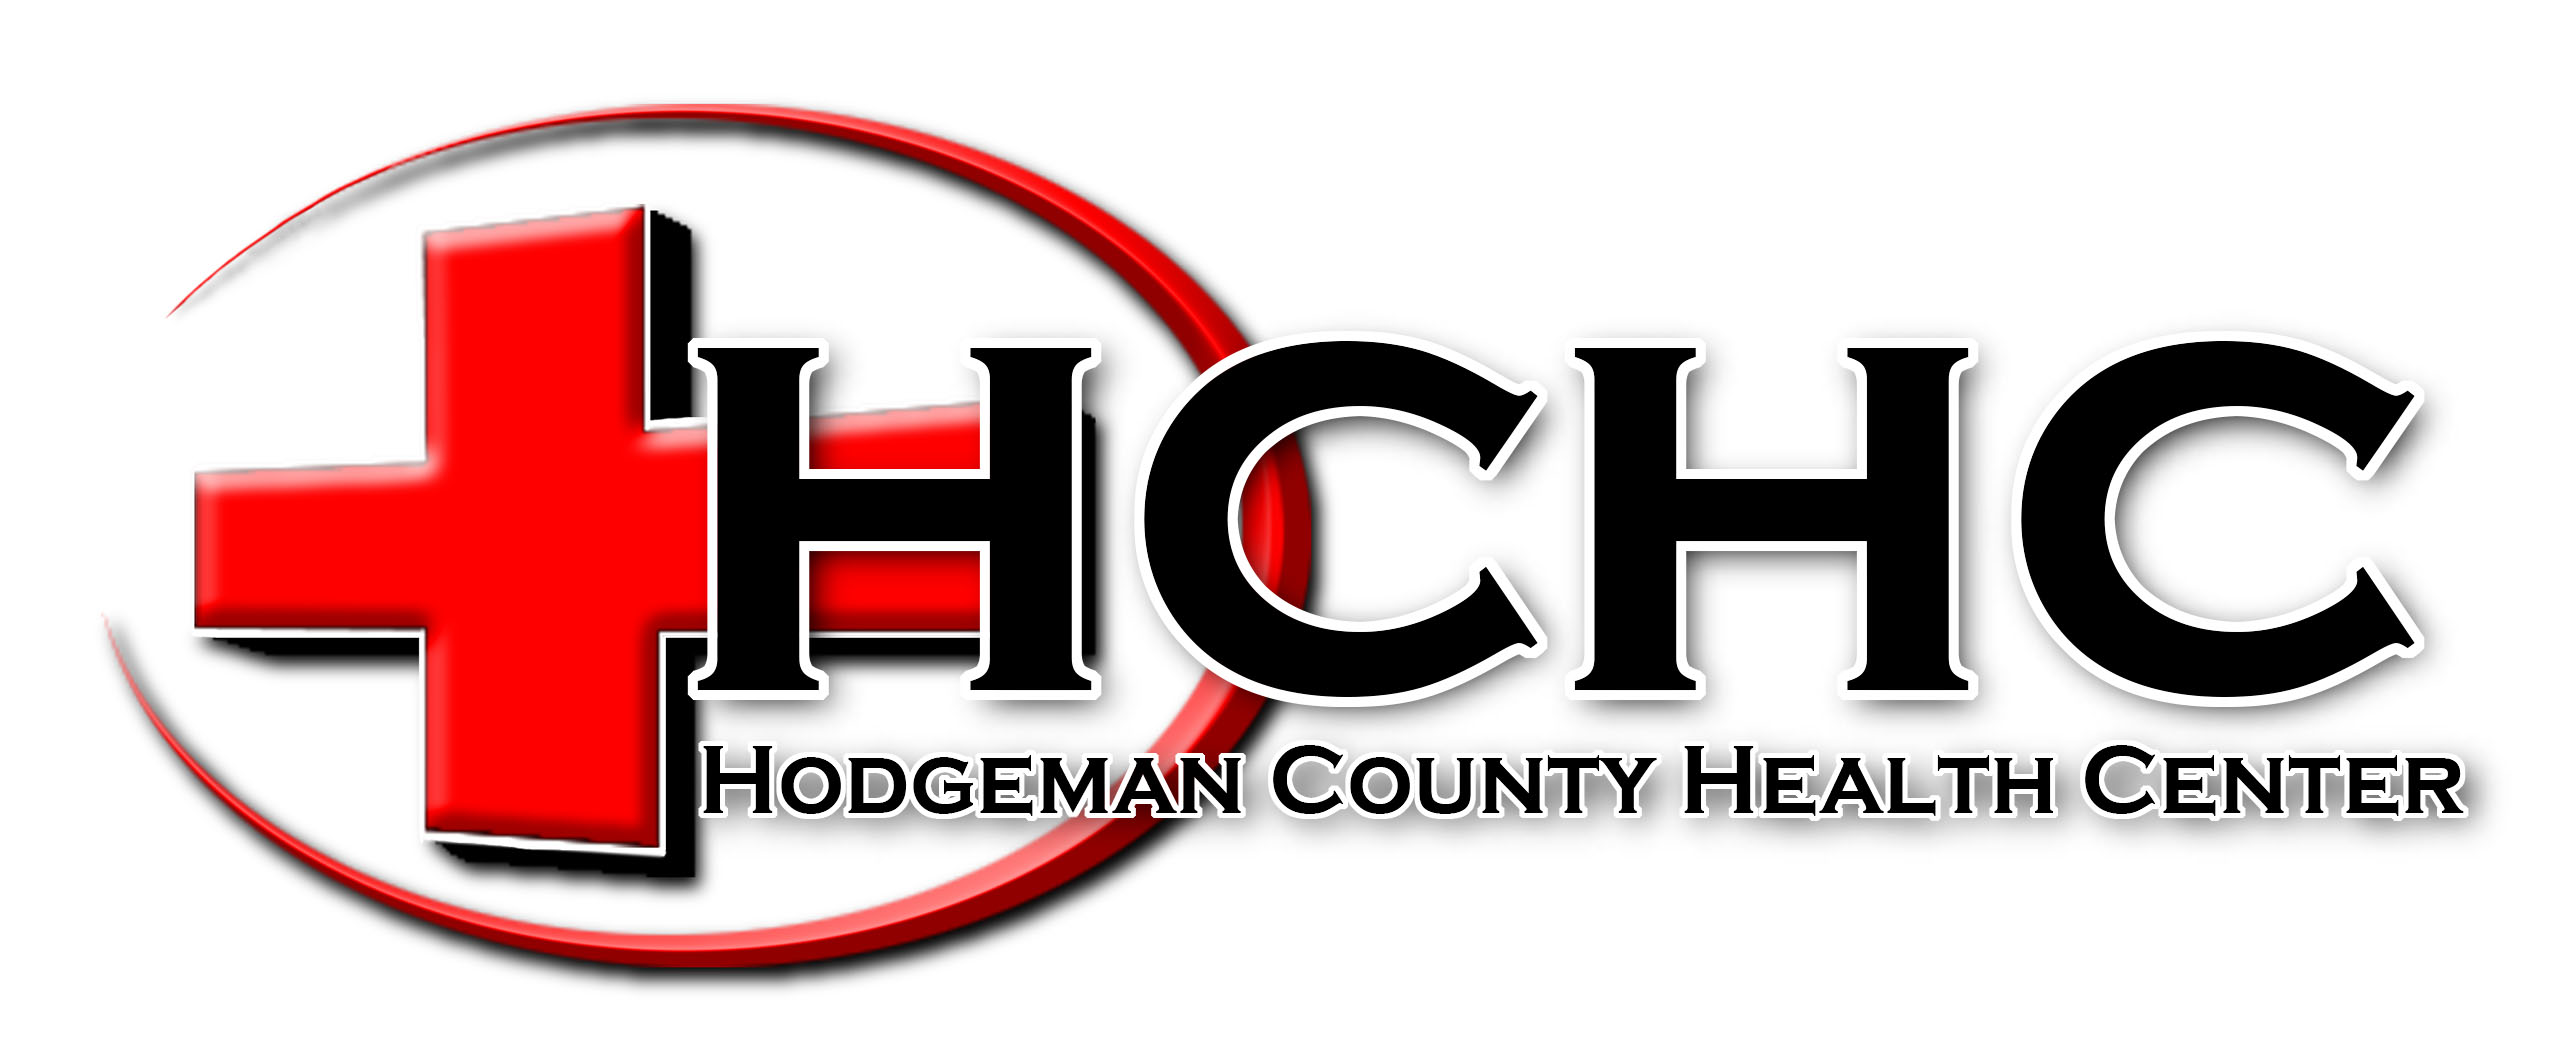 Hodgeman County Health Center logo